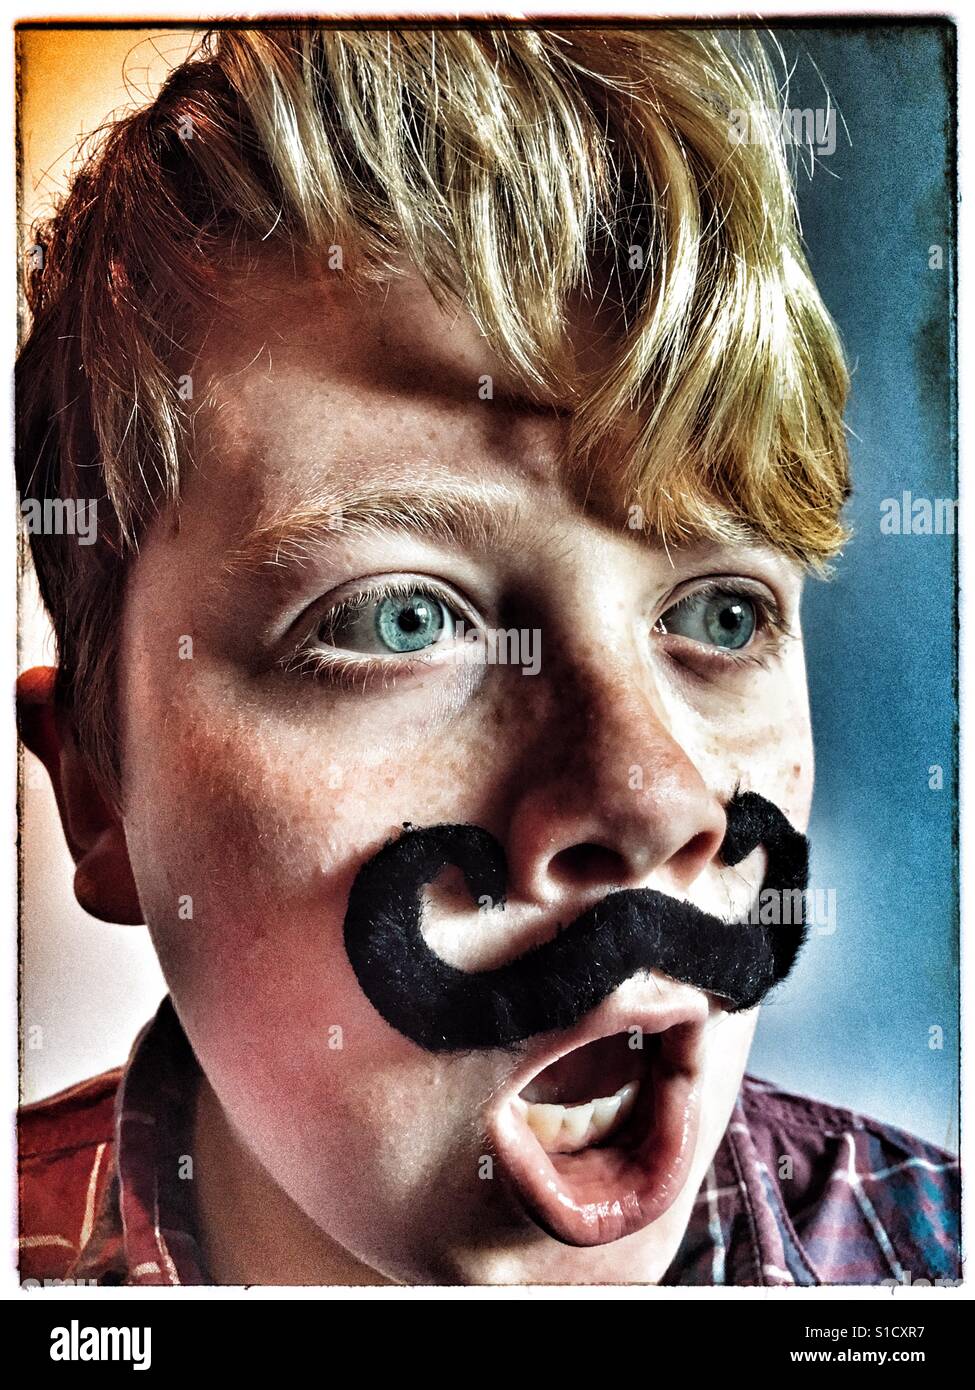 Comedy moustache Stock Photo